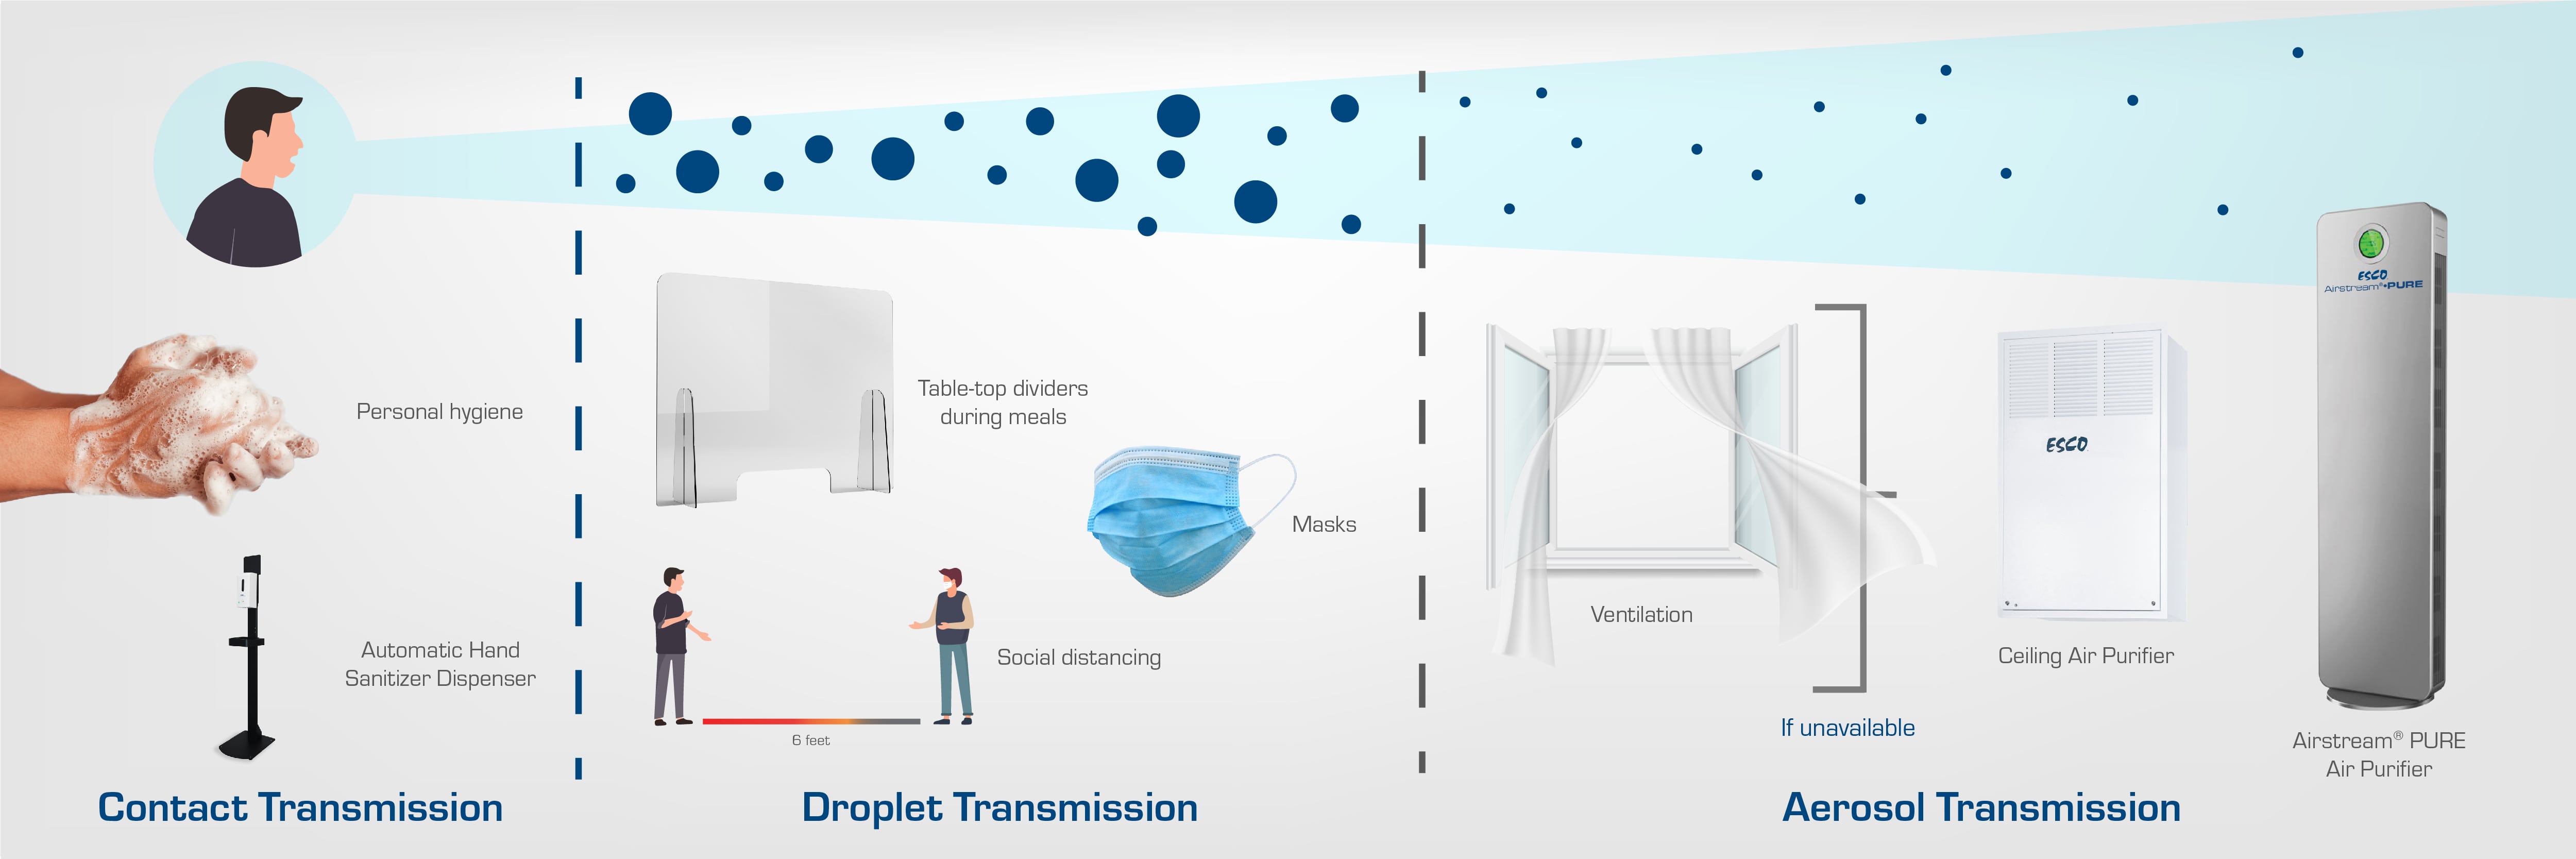 Types of Transmission